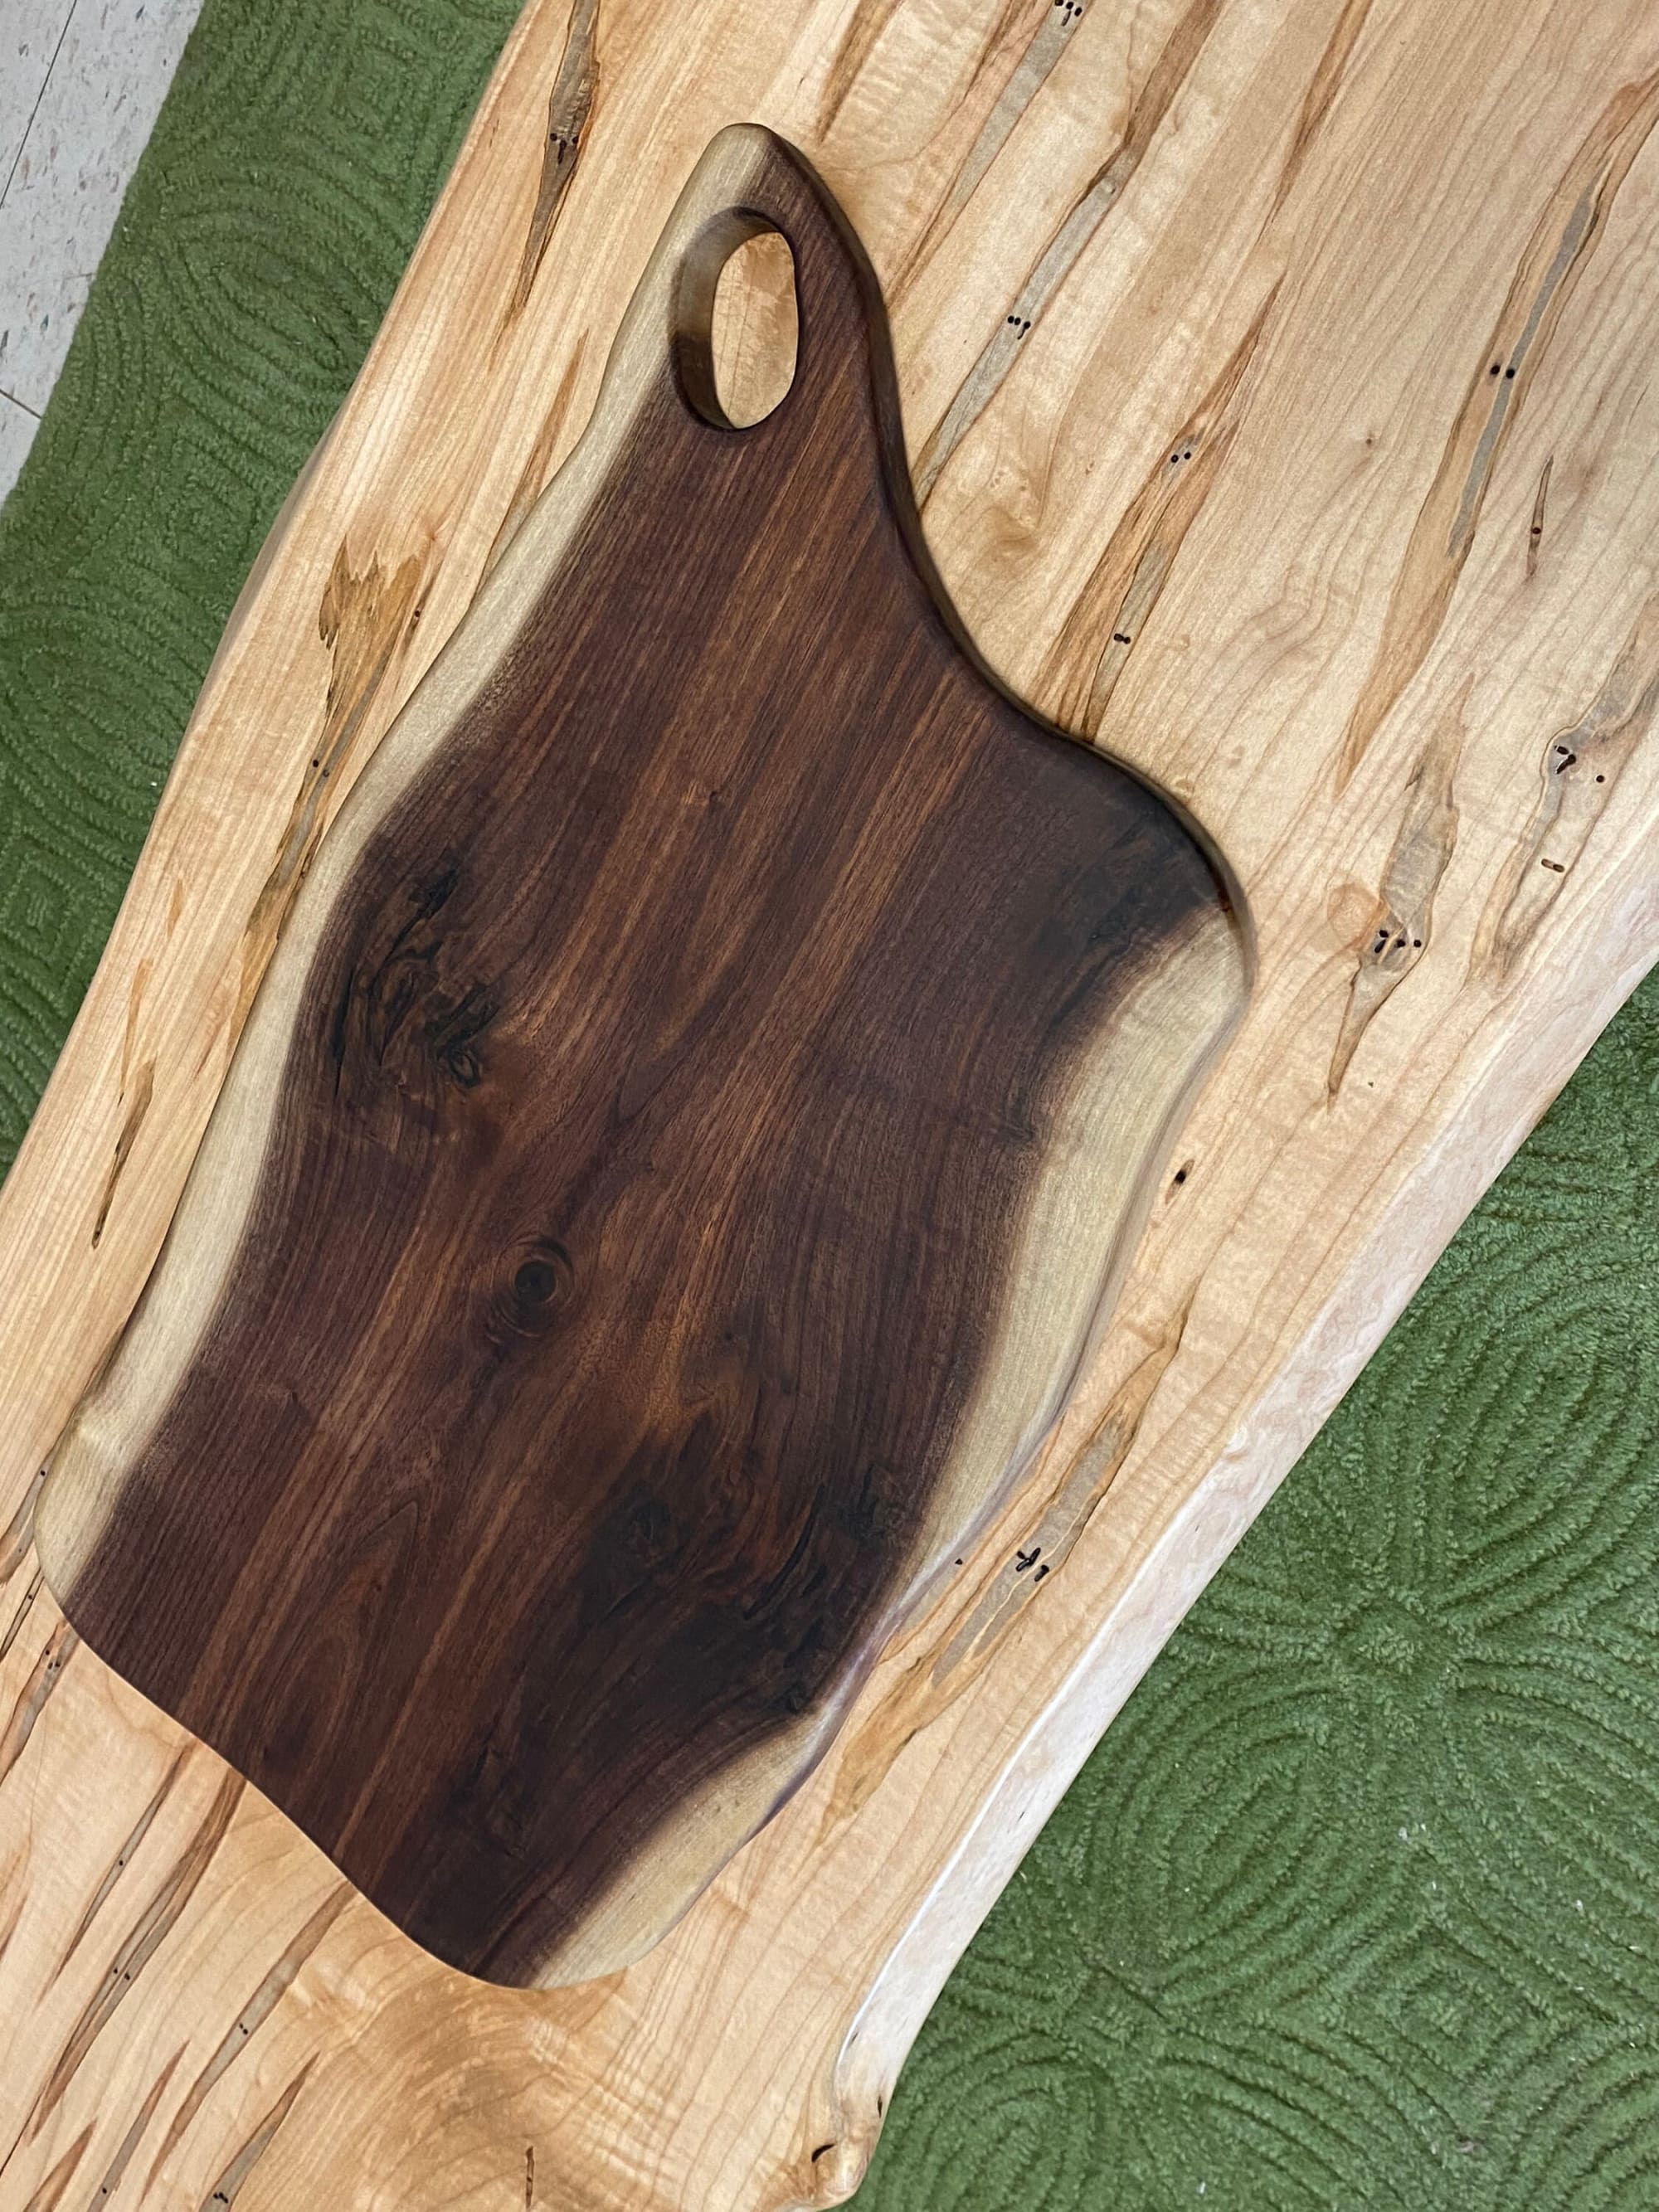 Live Edge Walnut Wood Cutting Board Charcuterie Board 